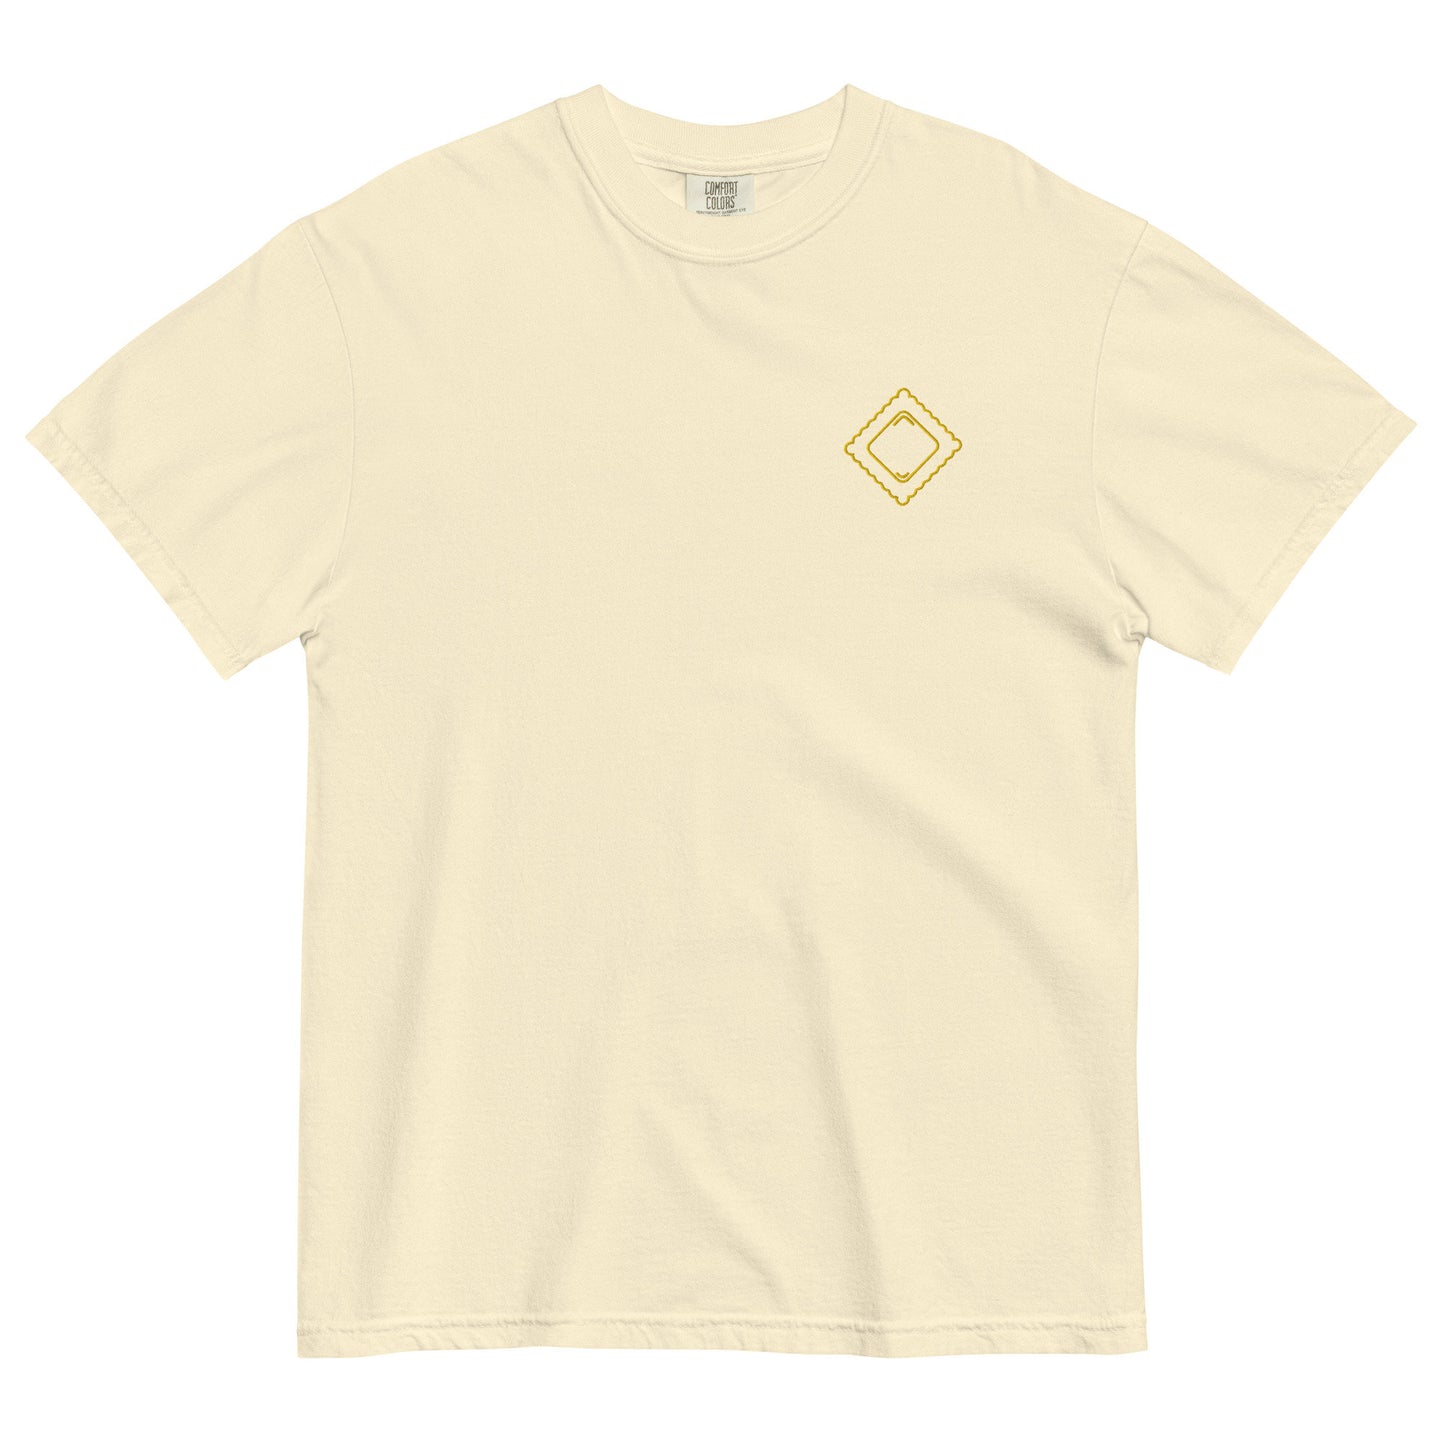 Ravioli T Shirt - Gift for Italian Pasta Lovers - Embroidered Shirt